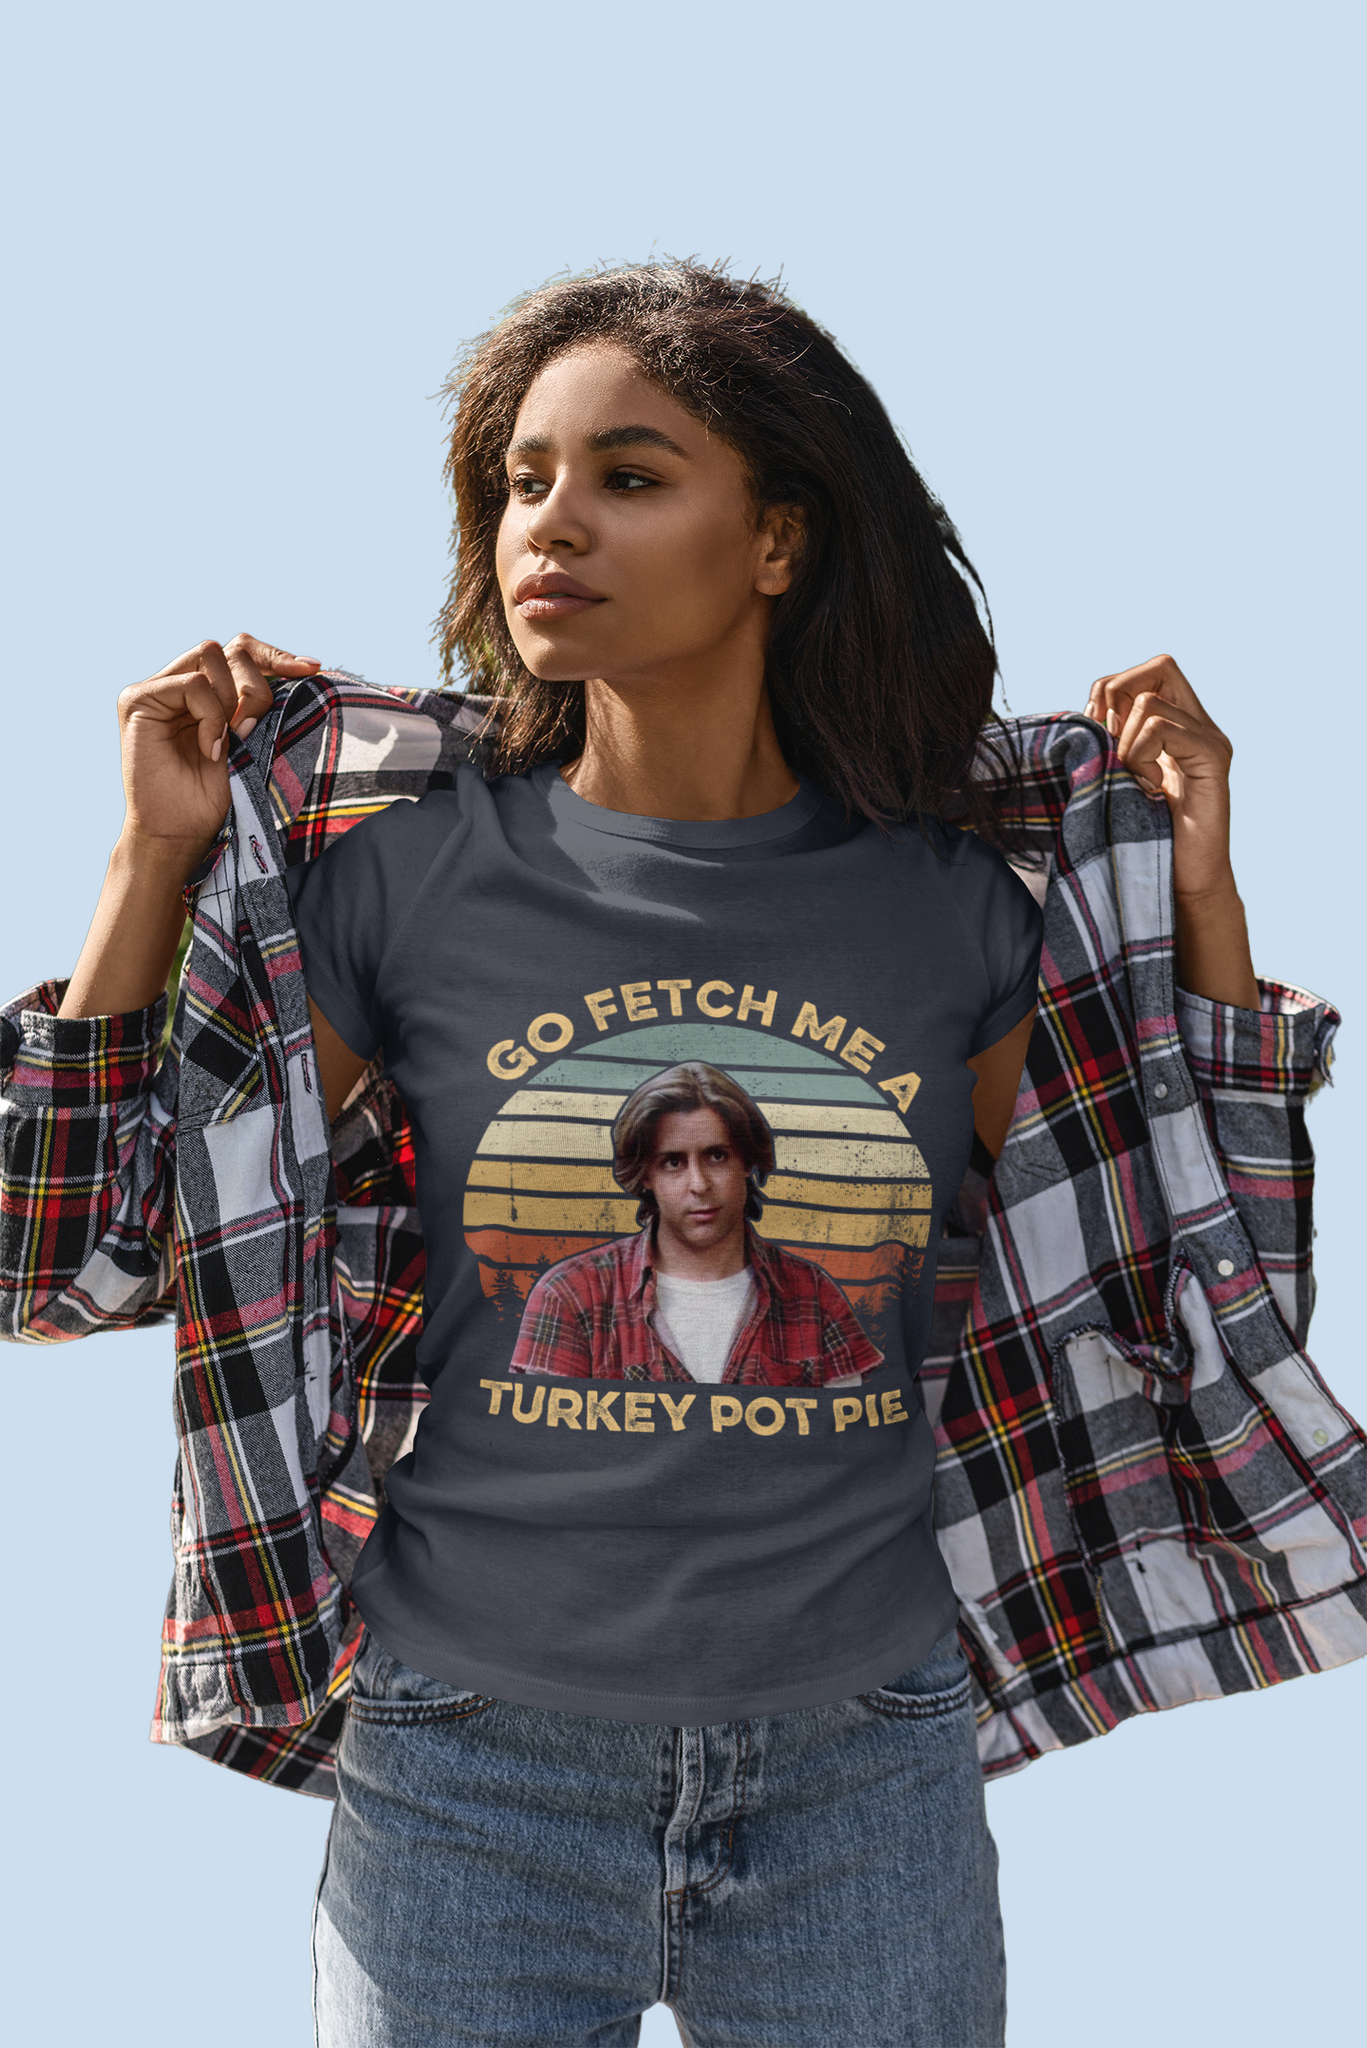 Breakfast Club Vintage T Shirt, John Bender Tshirt, Go Fetch Me A Turkey Pot Pie Tshirt